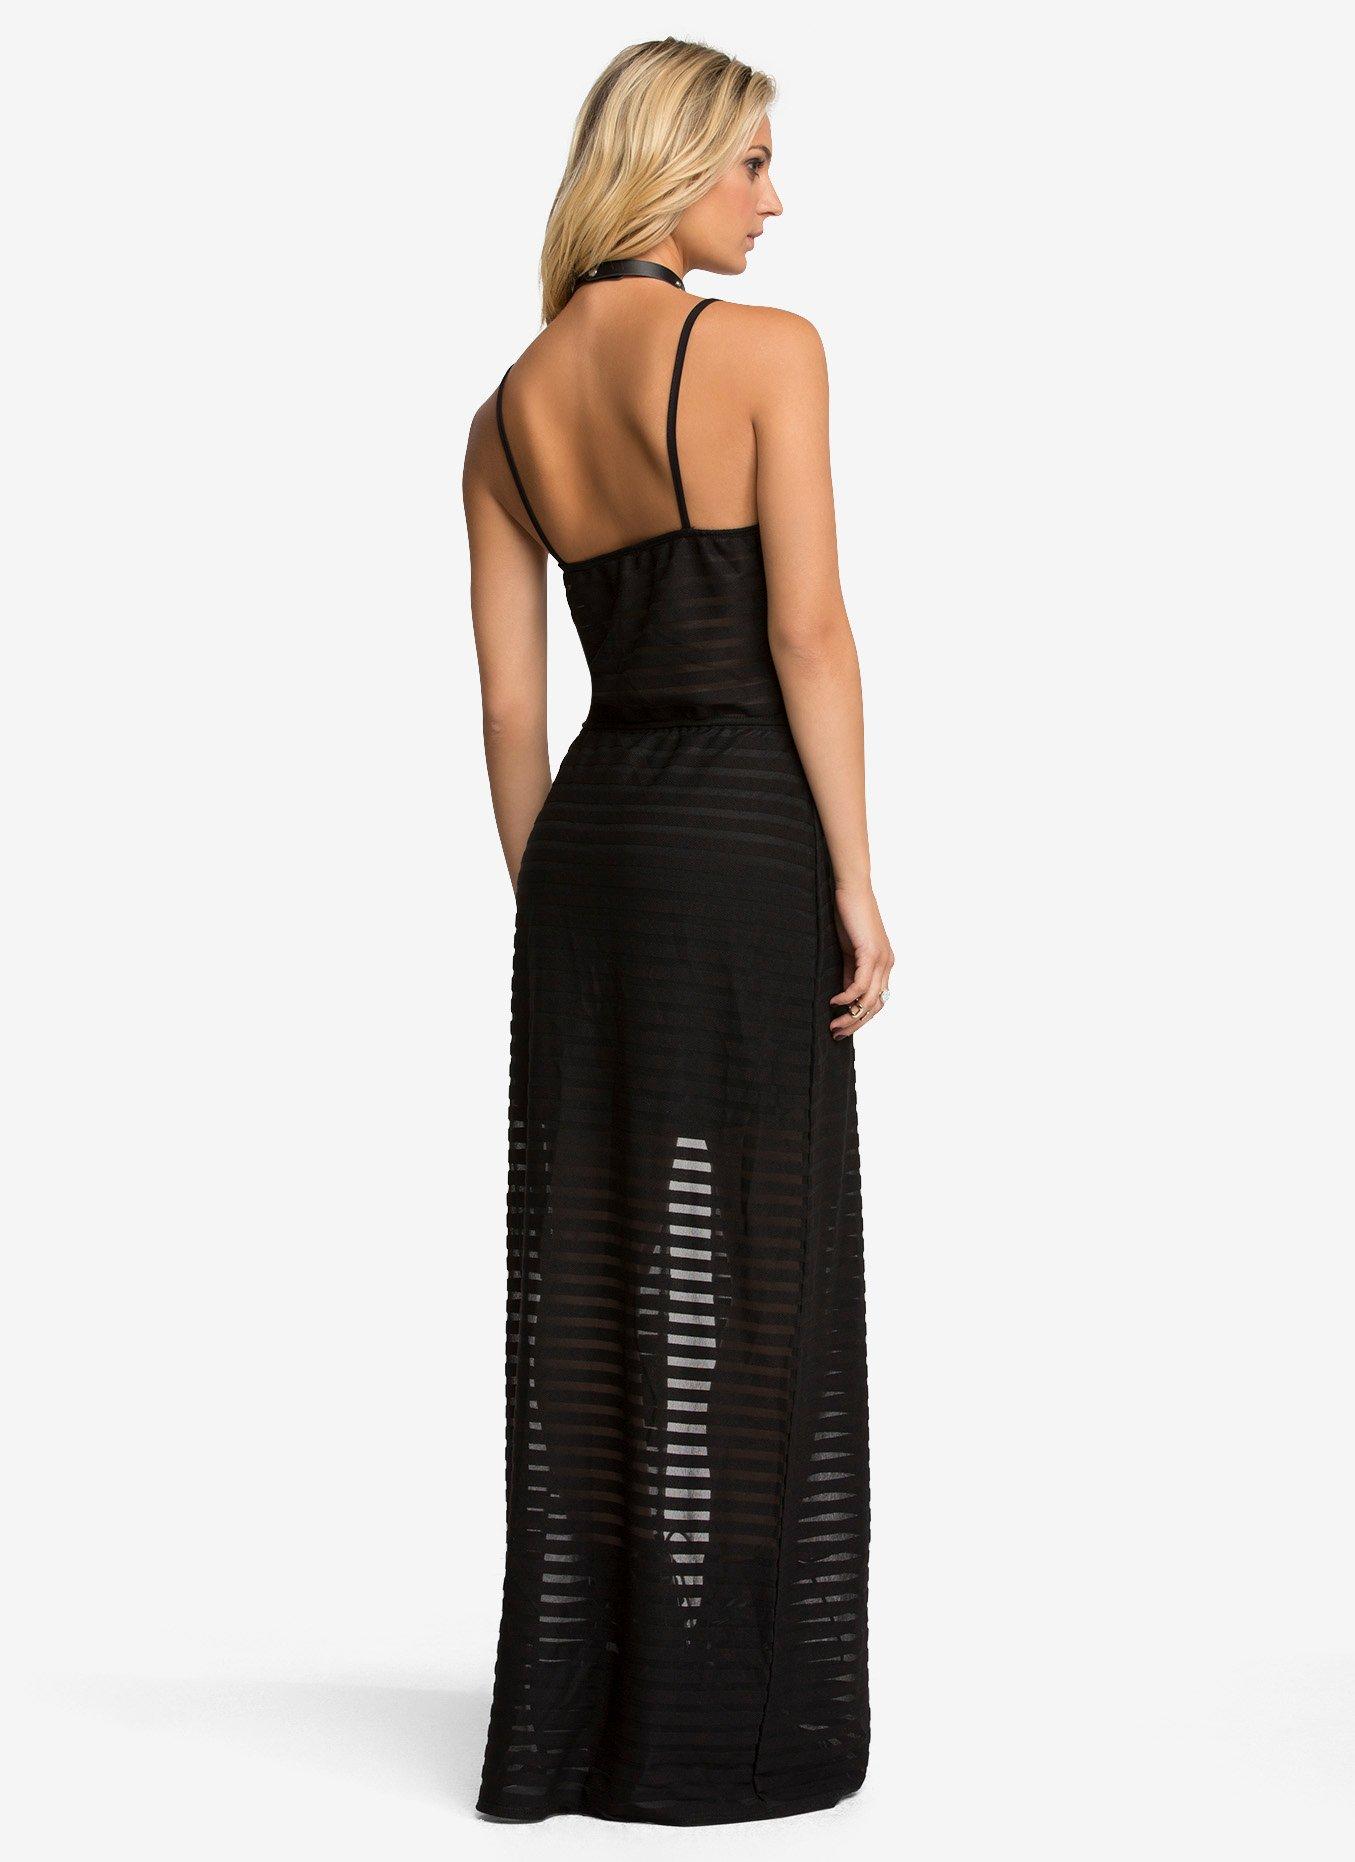 Shadow Stripe Maxi Dress, BLACK, alternate